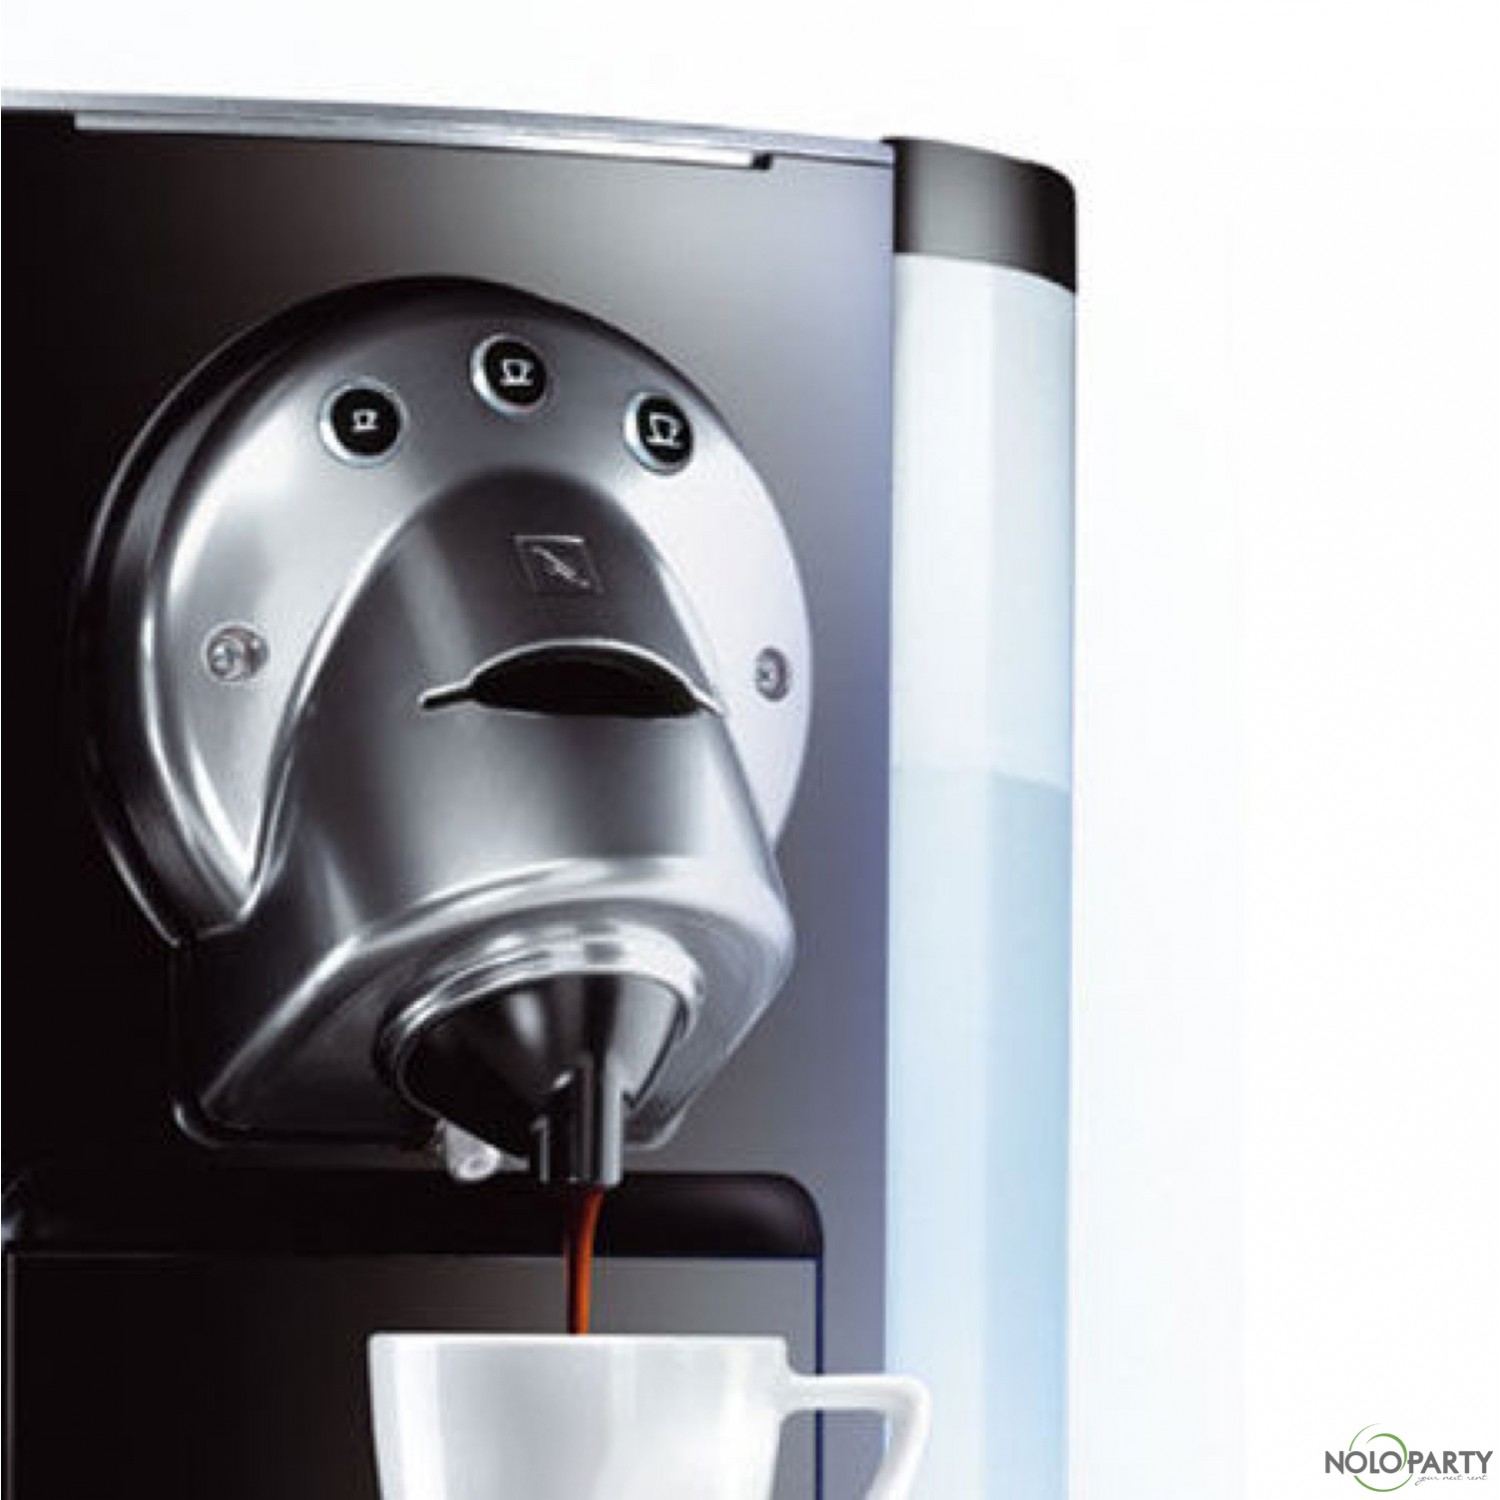 NOLEGGIO MACCHINA DA CAFFE' NESPRESSO - NESPRESSO COFFEE MACHINE RENTAL -  Catering Fiera